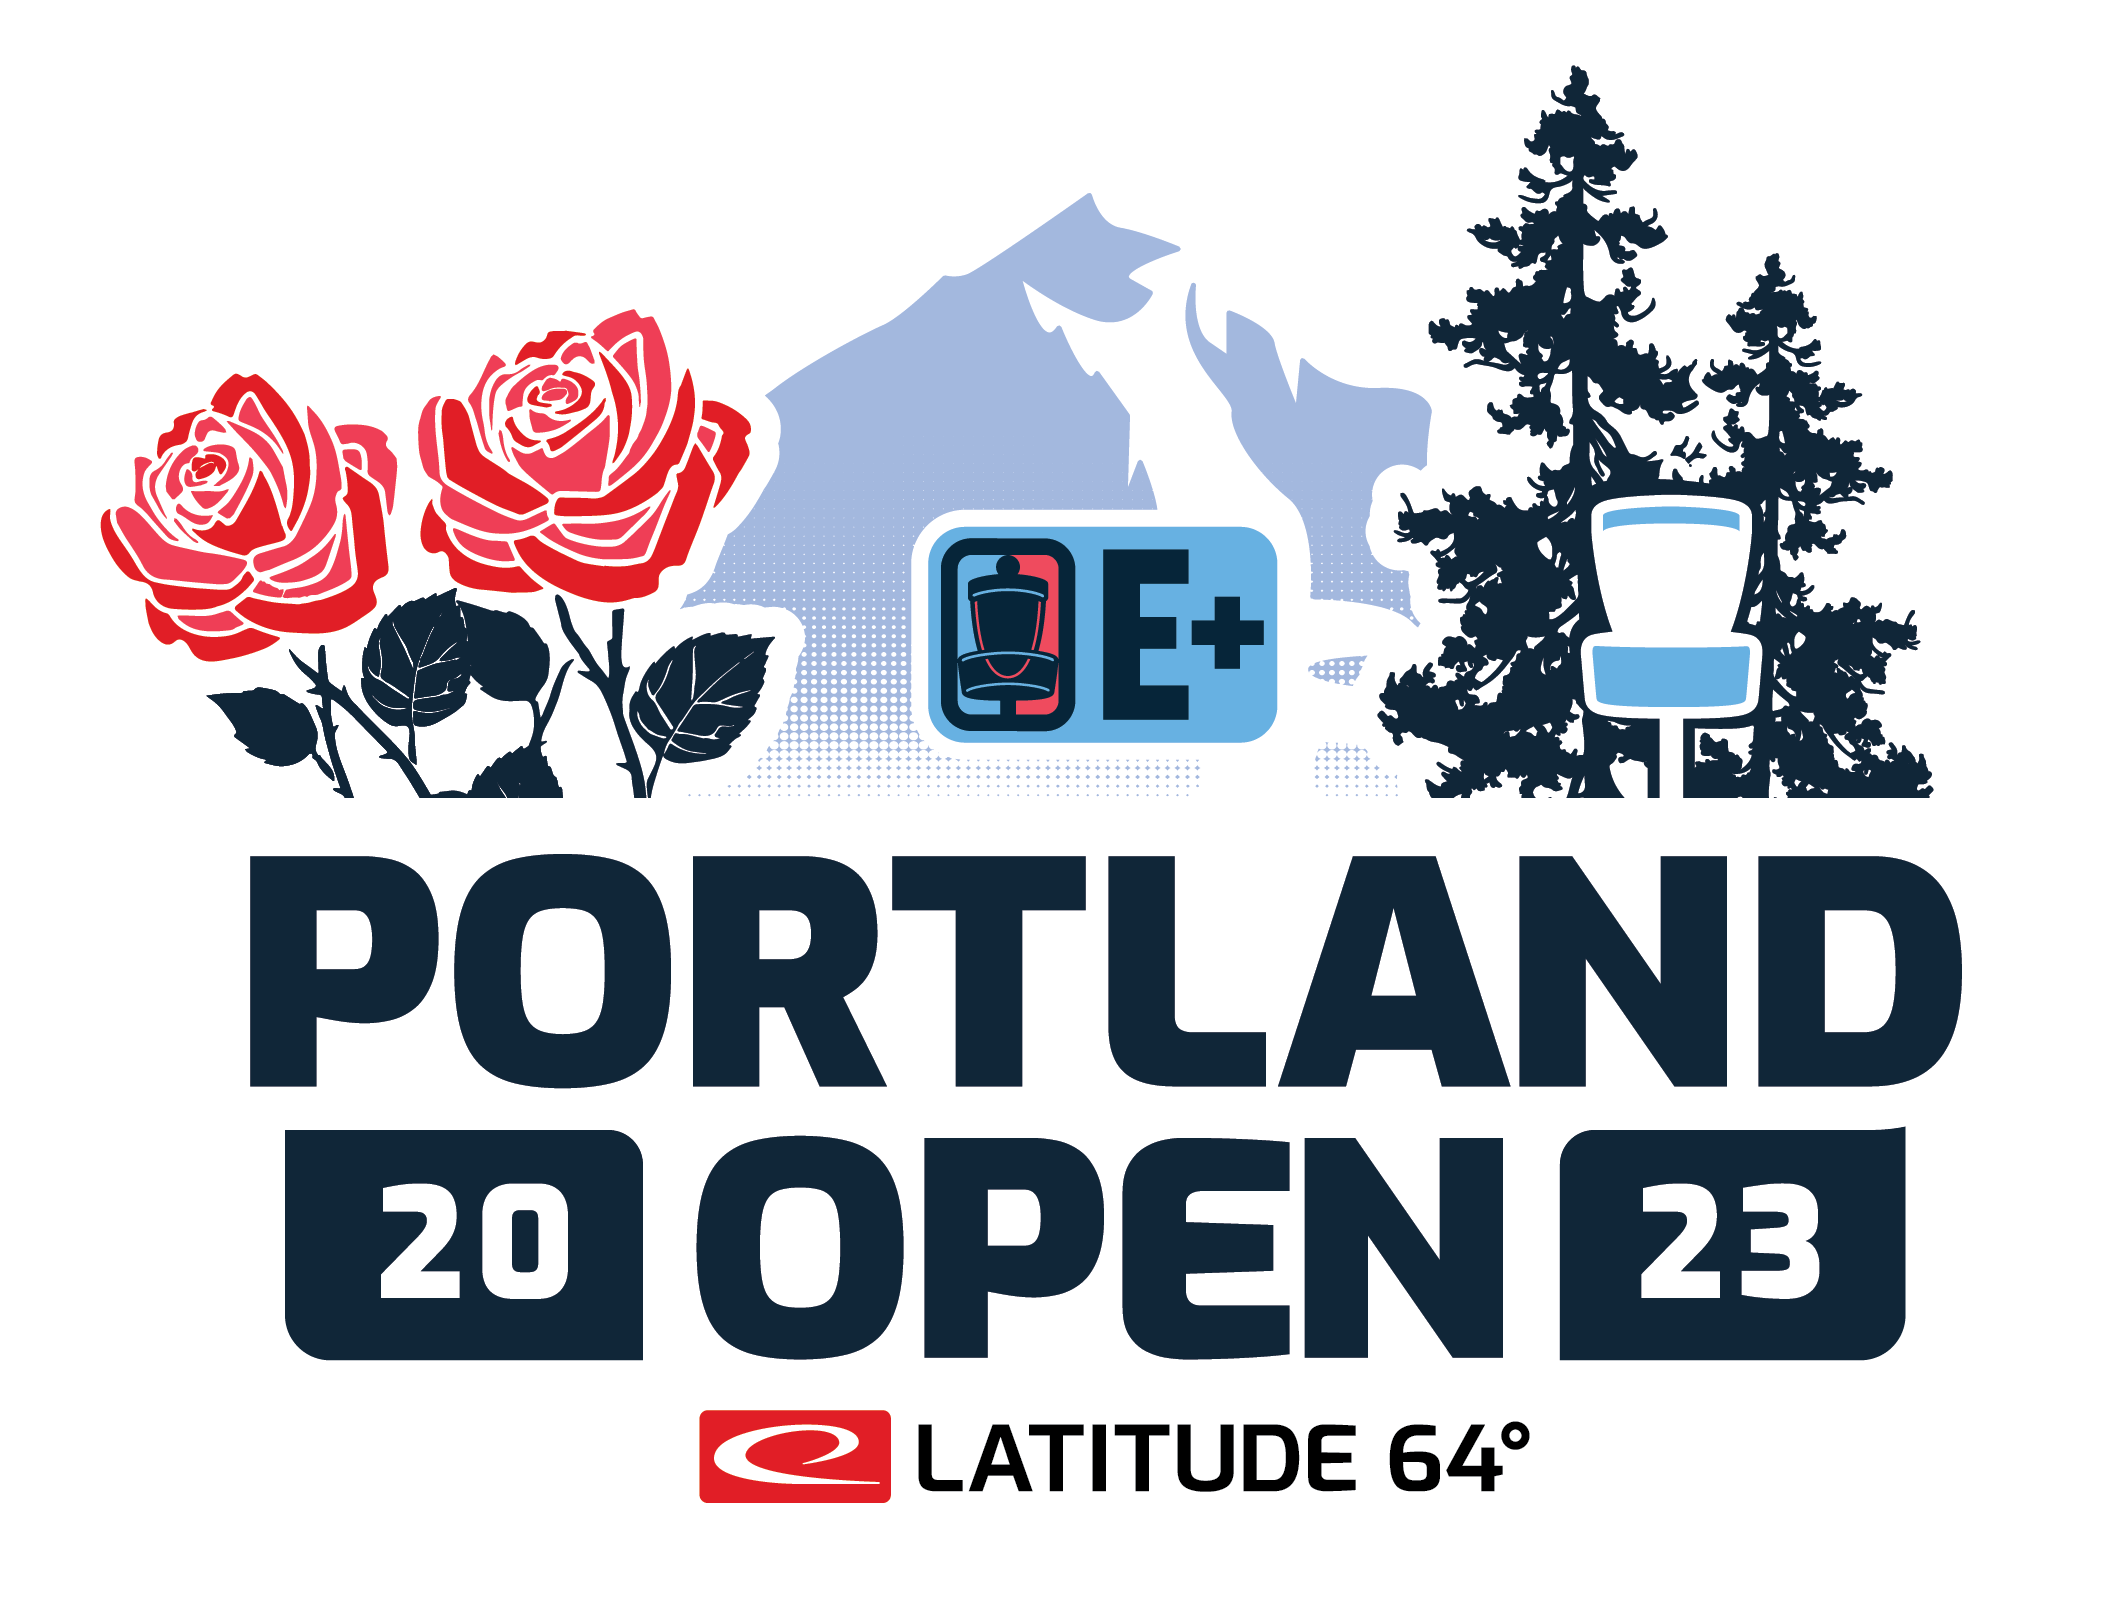 DGPT Portland Open Scores & Coverage Professional Disc Golf